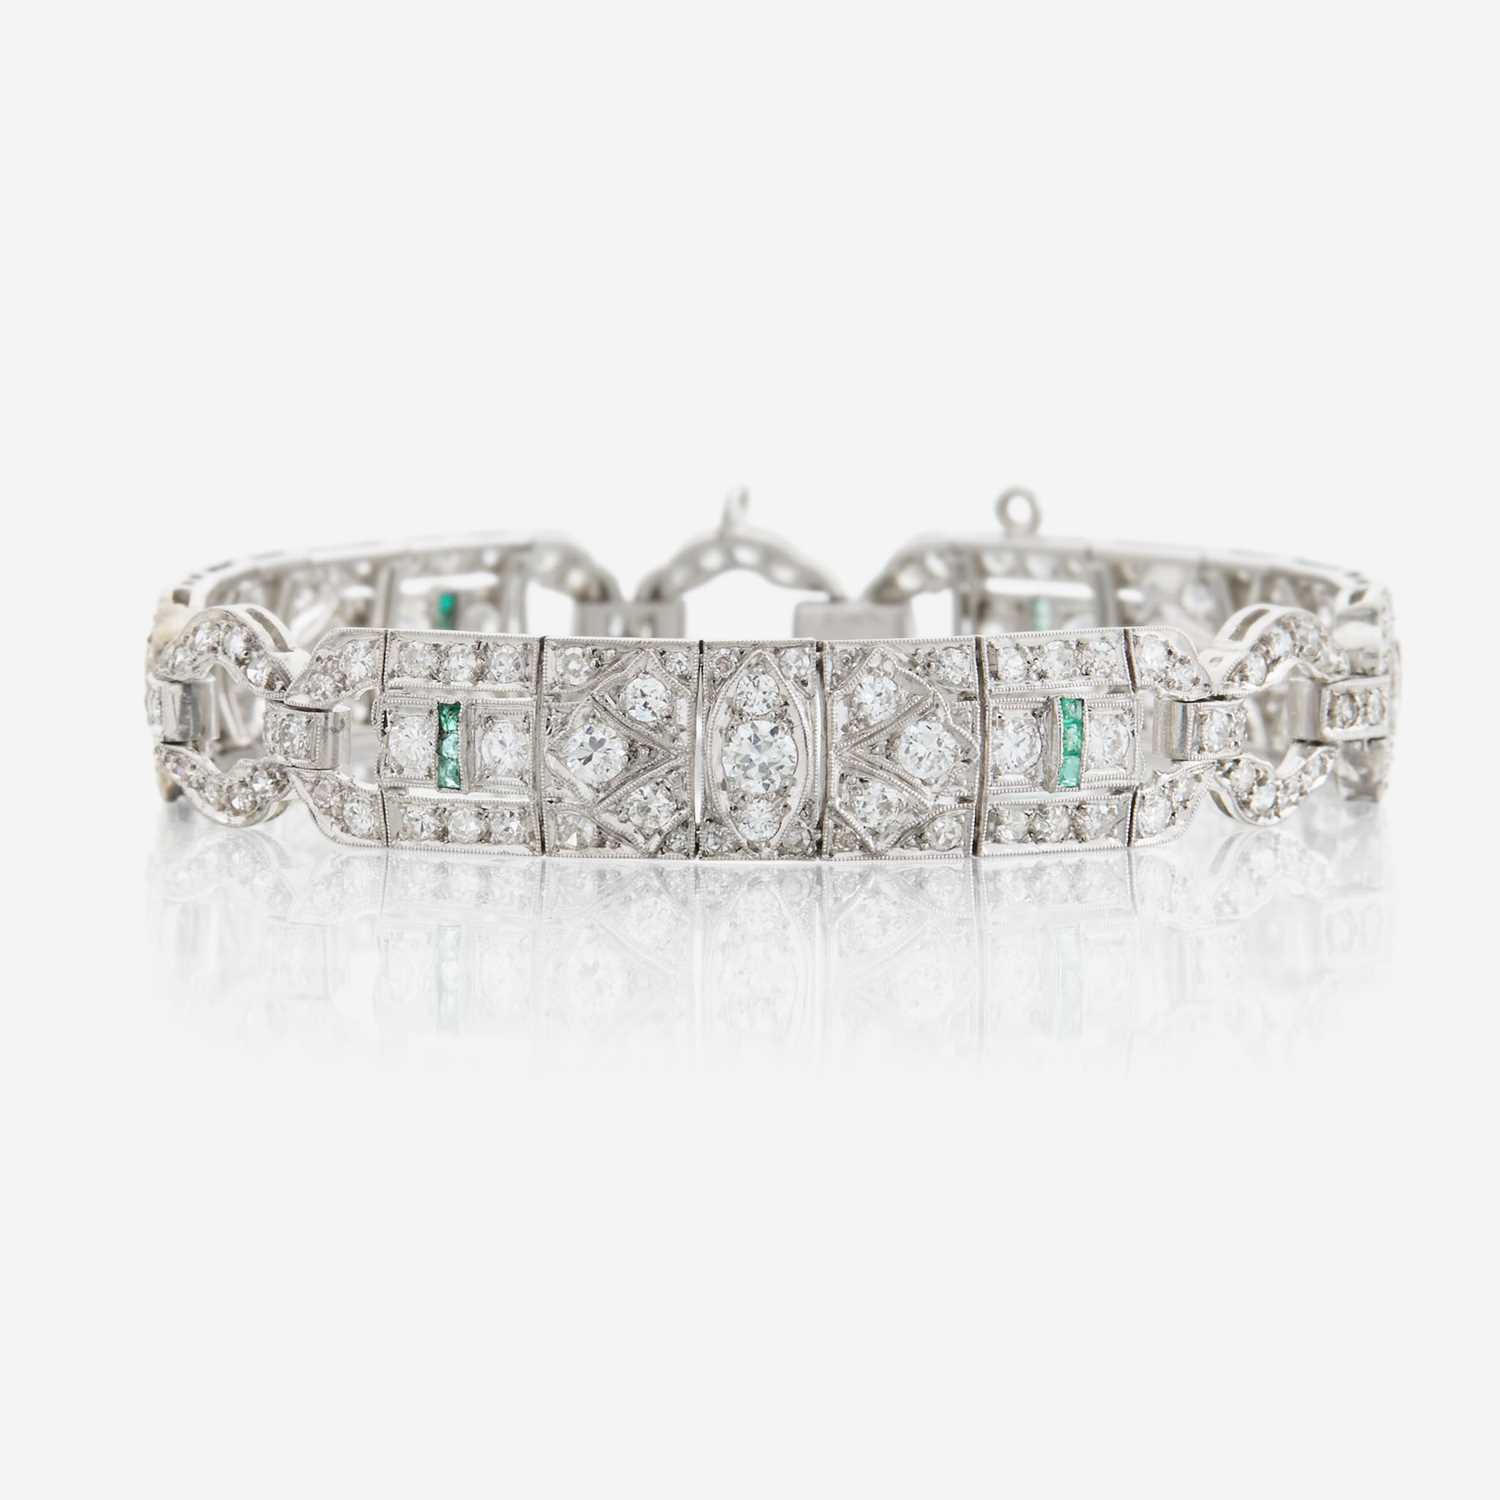 Lot 29 - An Art Deco diamond, emerald, and platinum bracelet